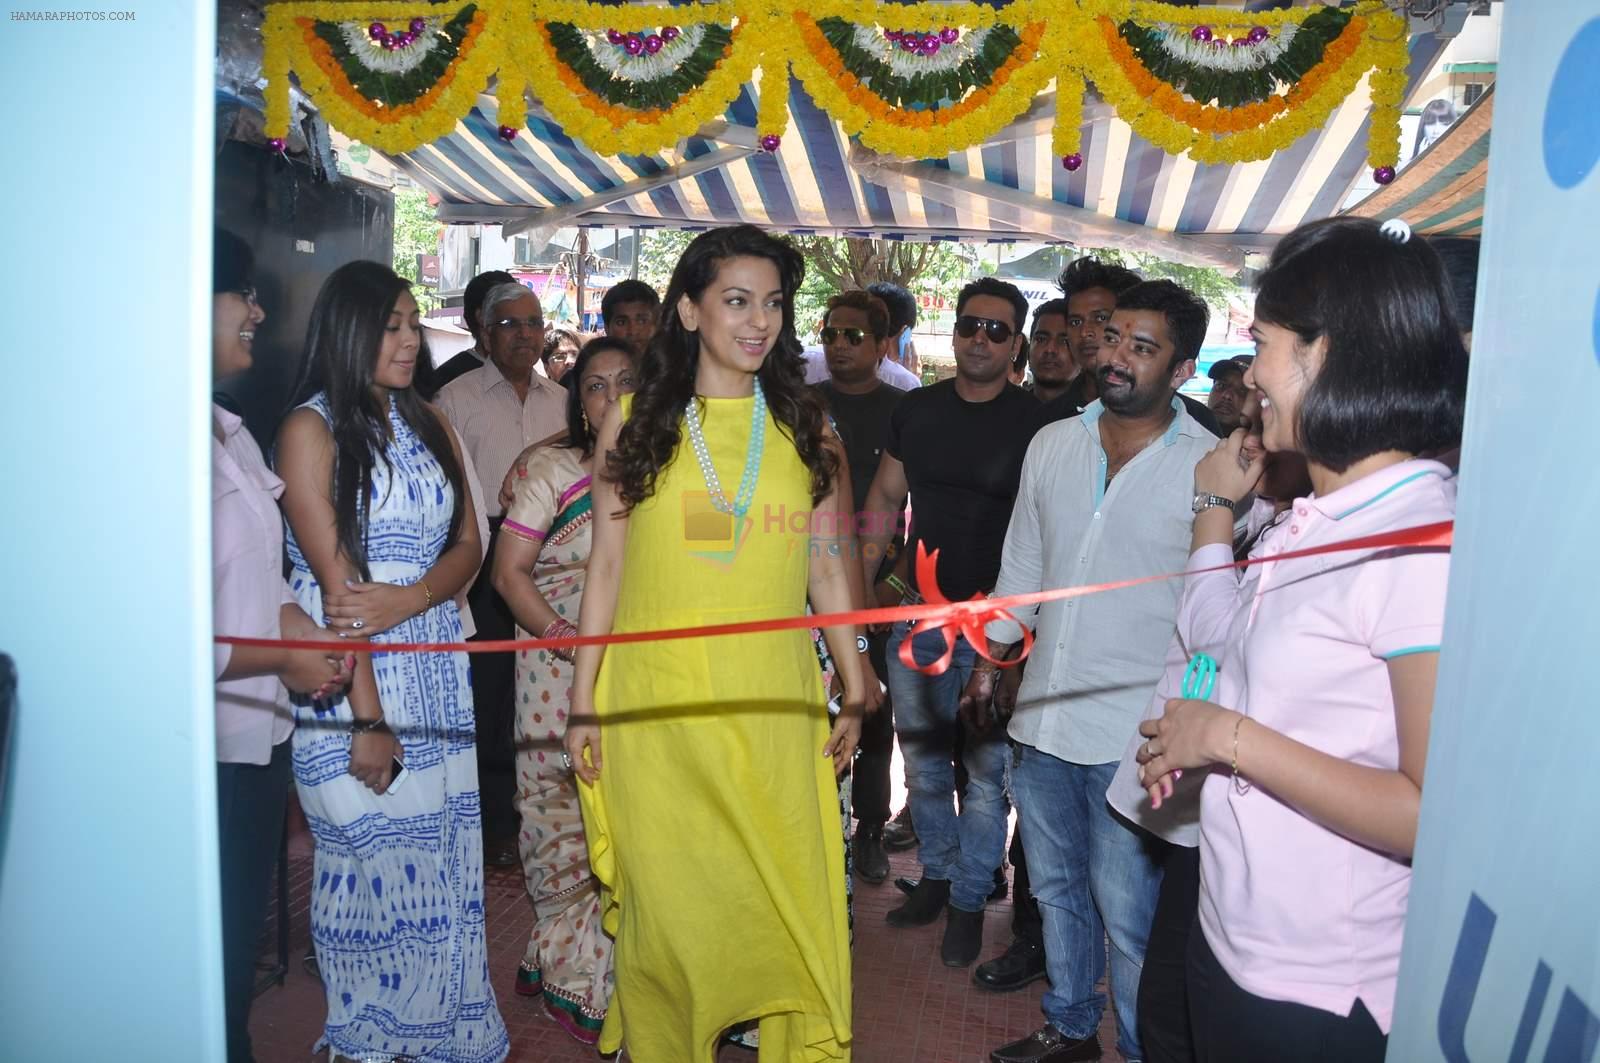 Juhi Chawla launch skin clinic in Parle, Mumbai on 28th April 2015